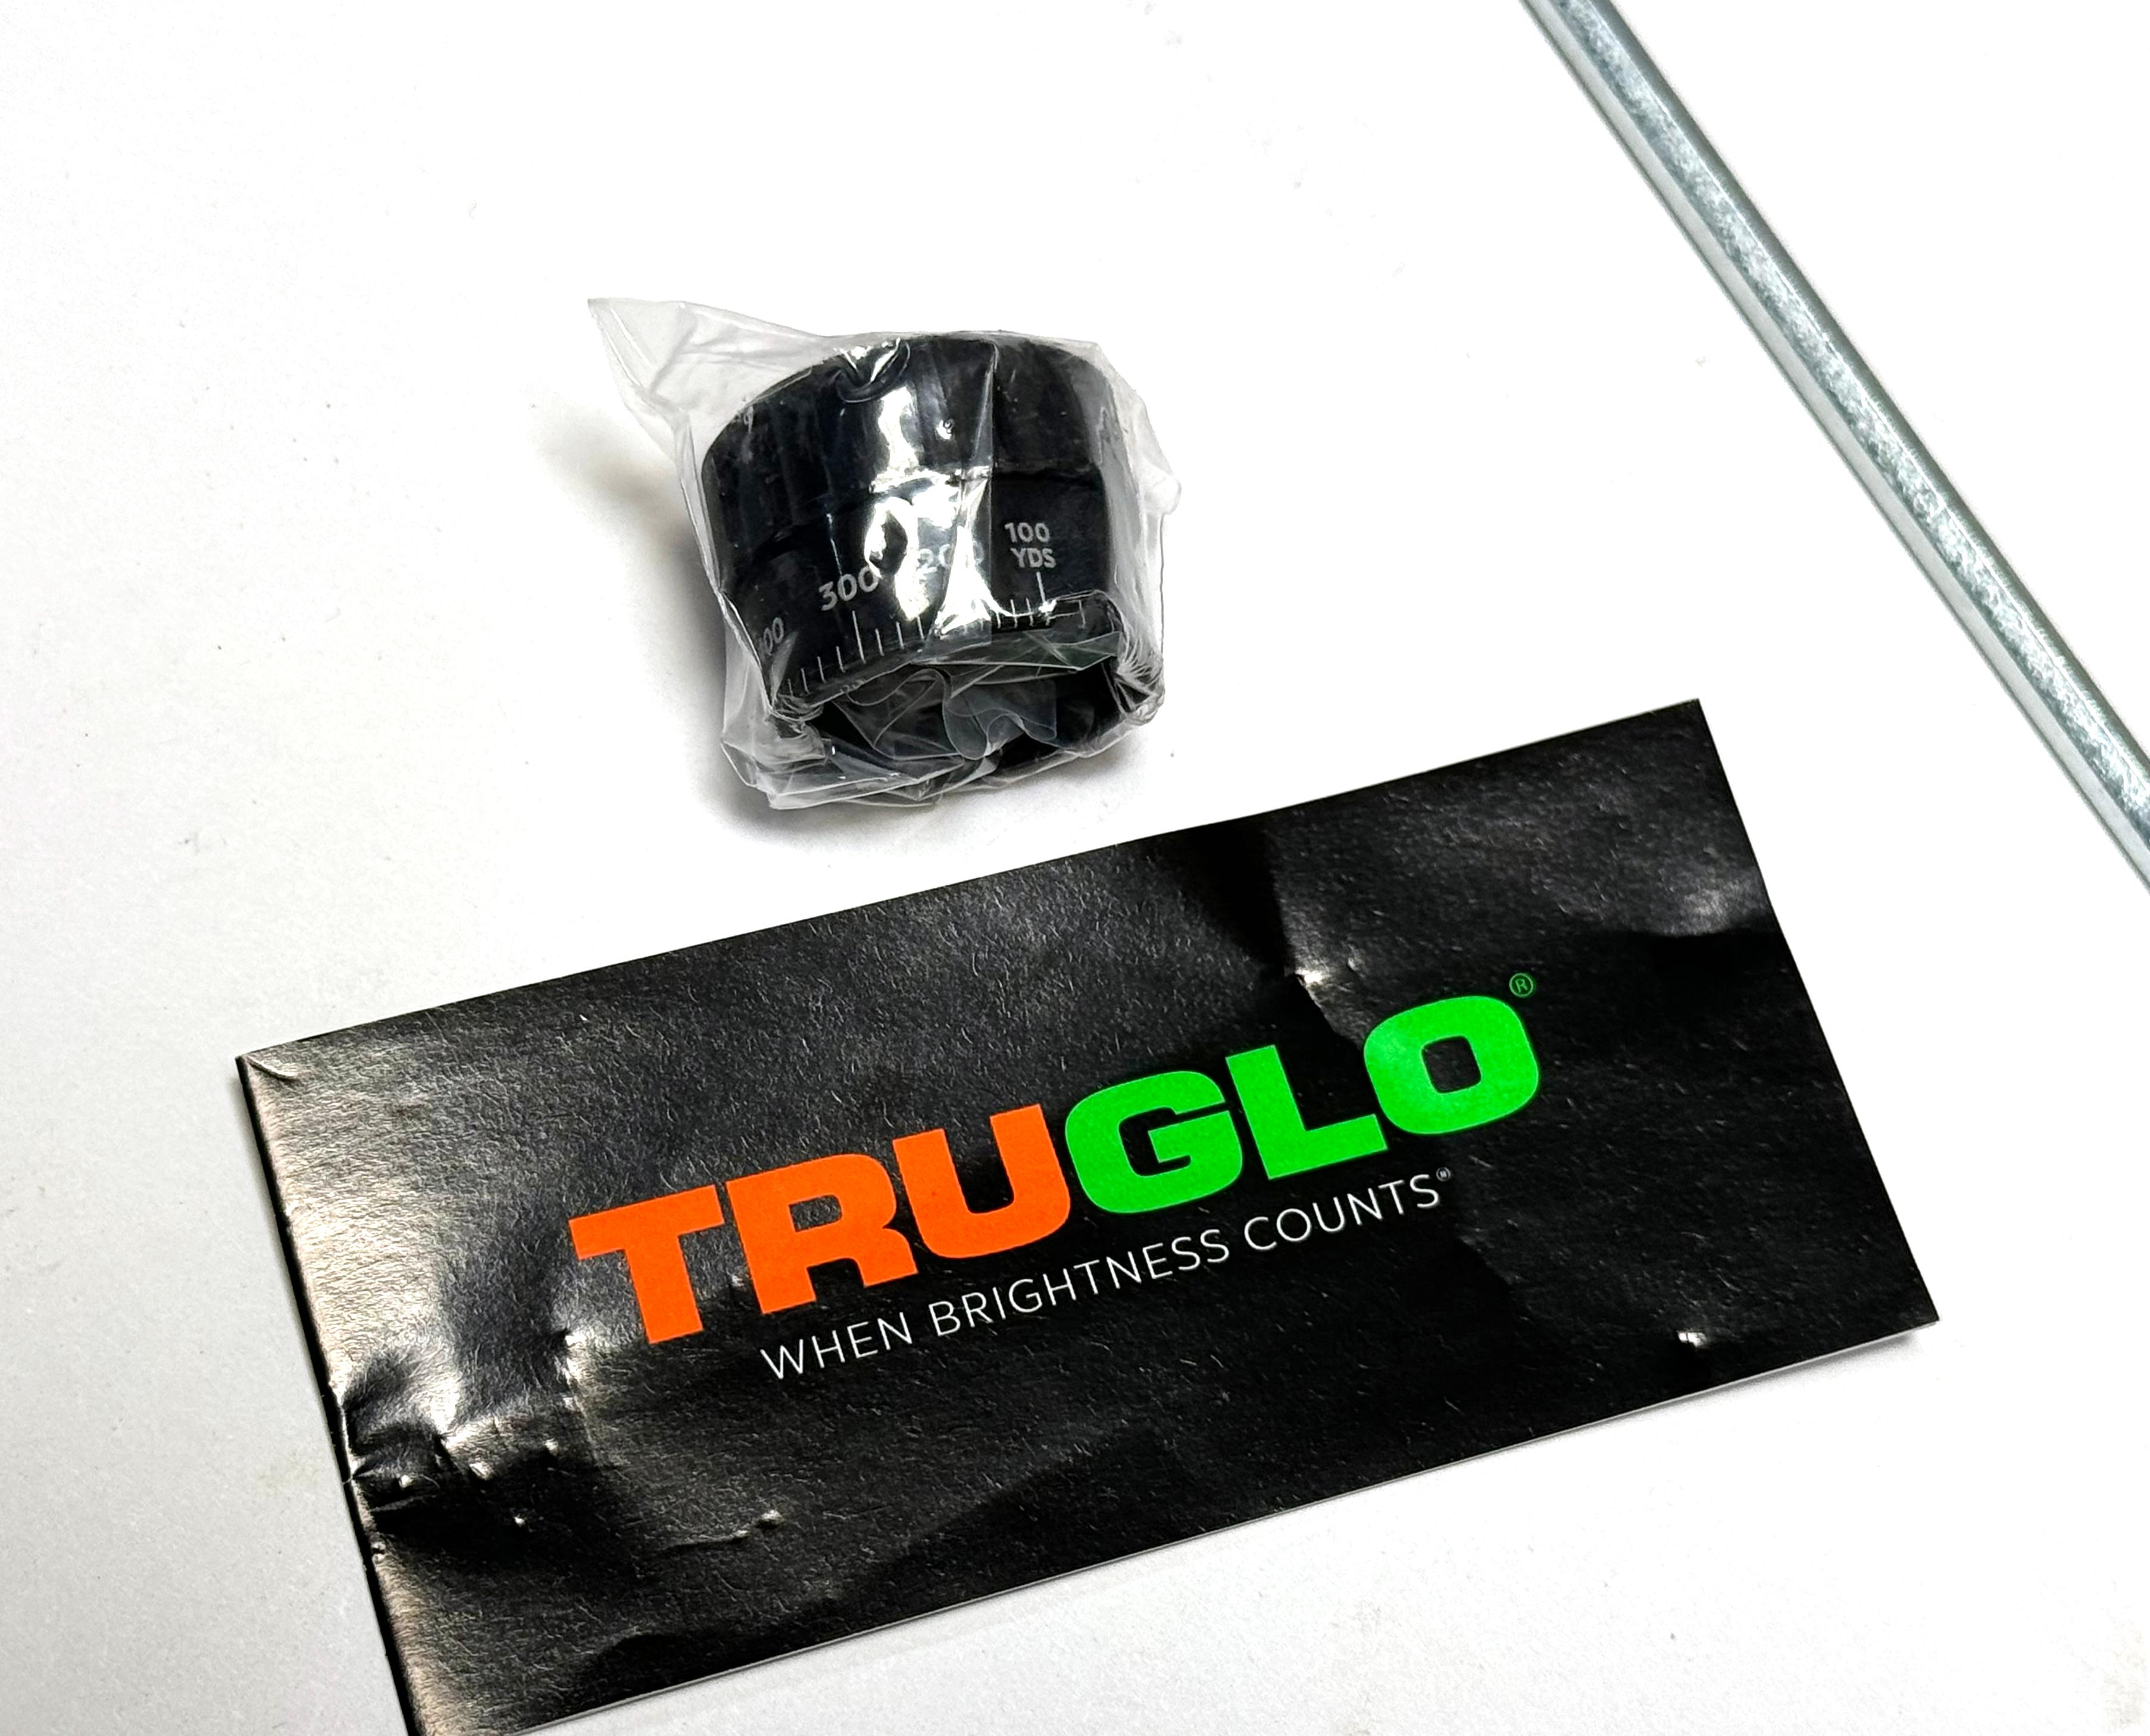 NIB TruGlo Tru-Brite 30 1-6x24 Dual Color Illuminated Scope with Mount